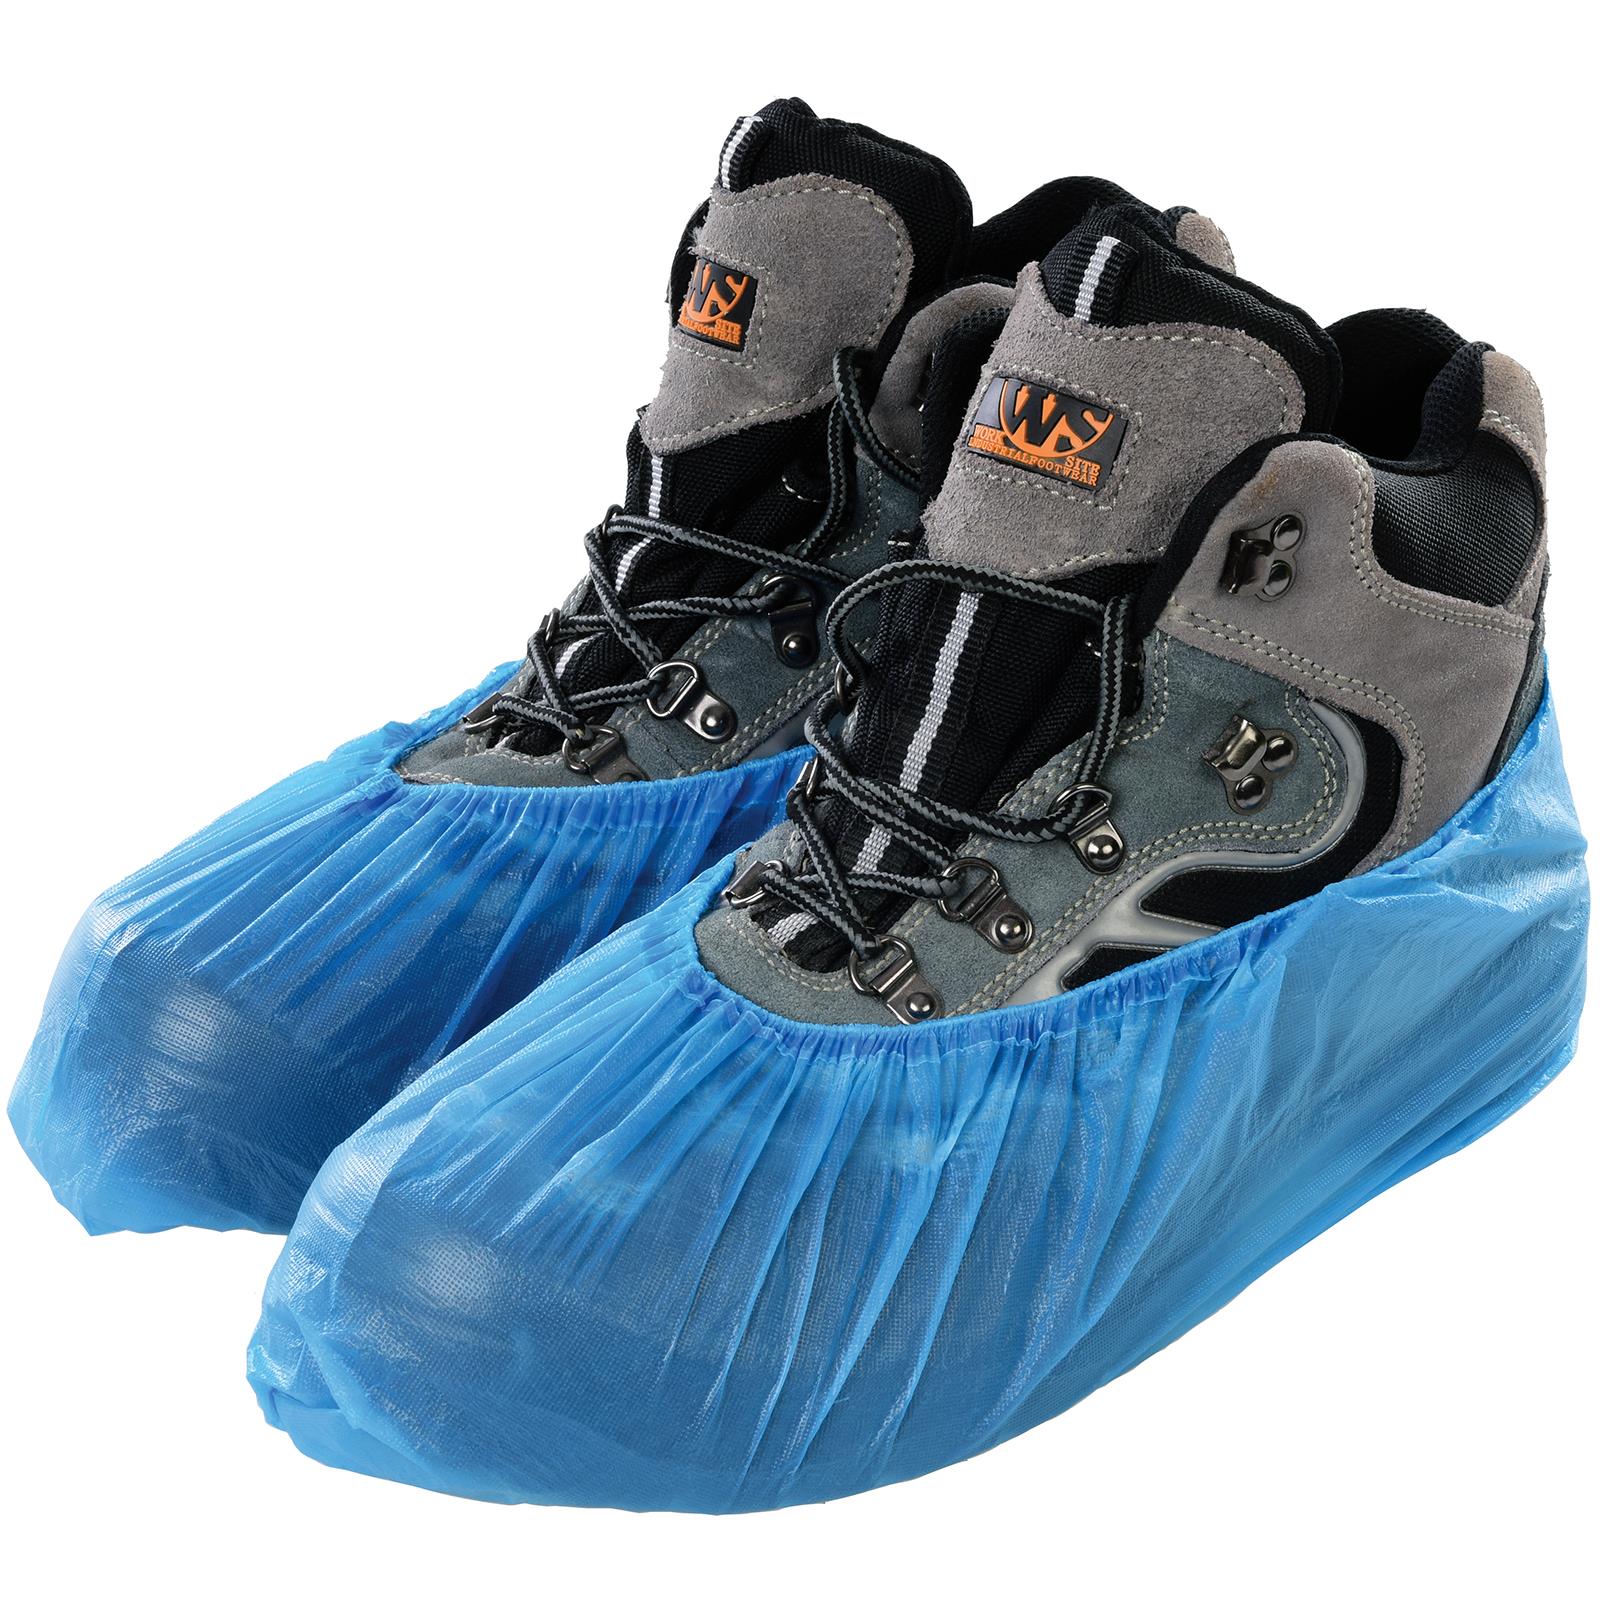 Silverline Disposable Shoe Covers Overshoes Boot Blue Splash Damp Resistant 100pk